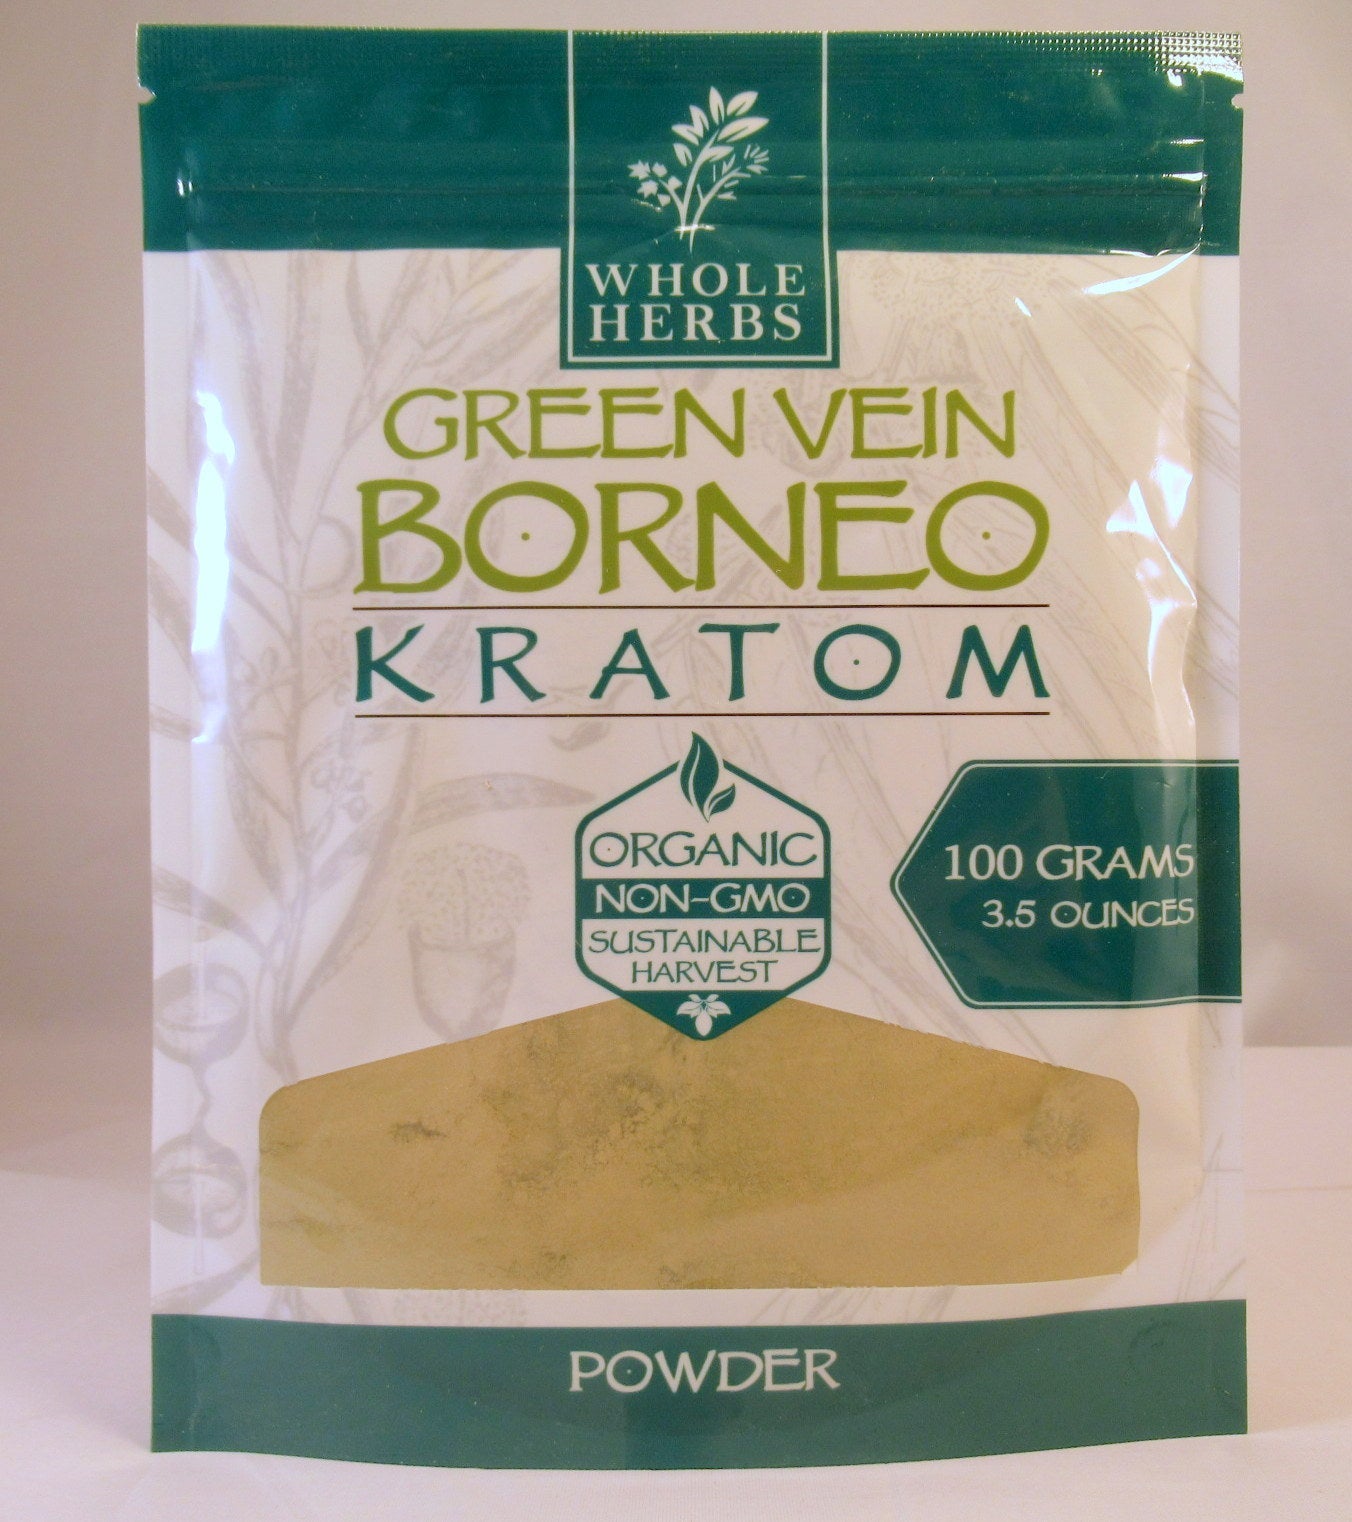 Whole Herbs Kratom Green Vein Borneo 100Gm/3.5Oz Powder